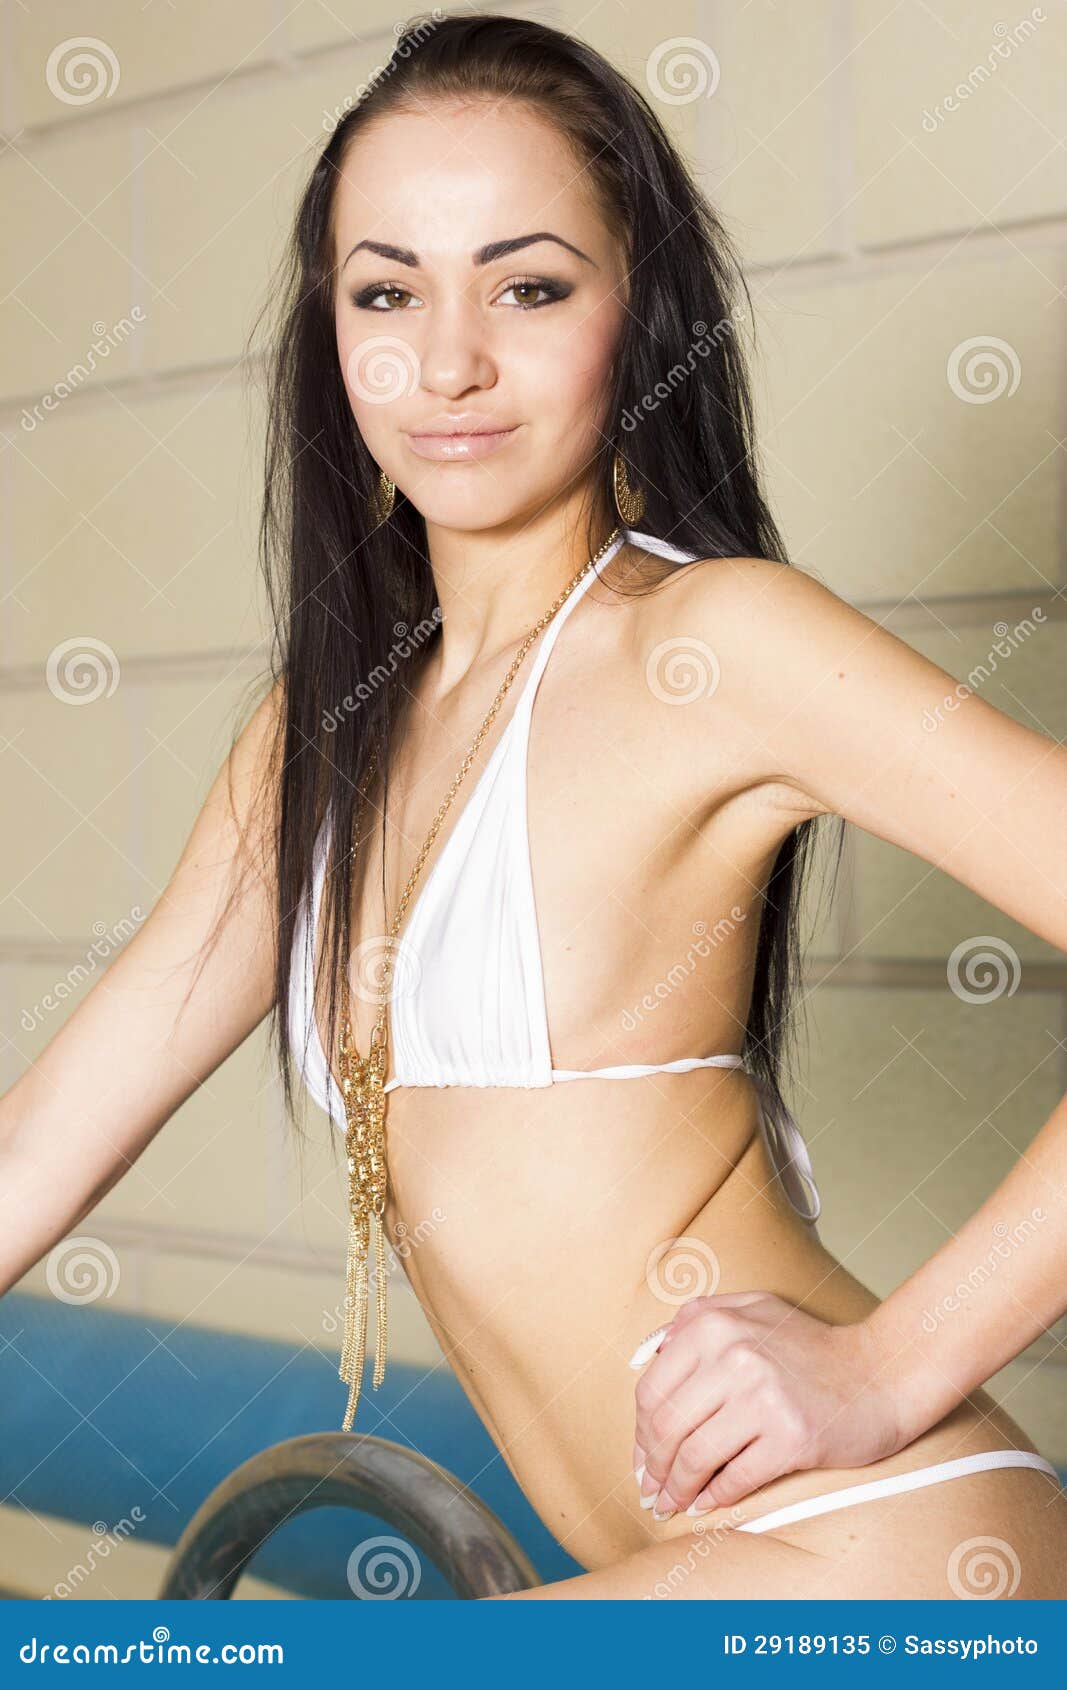 chinyere chika recommends beautiful girls in micro bikinis pic